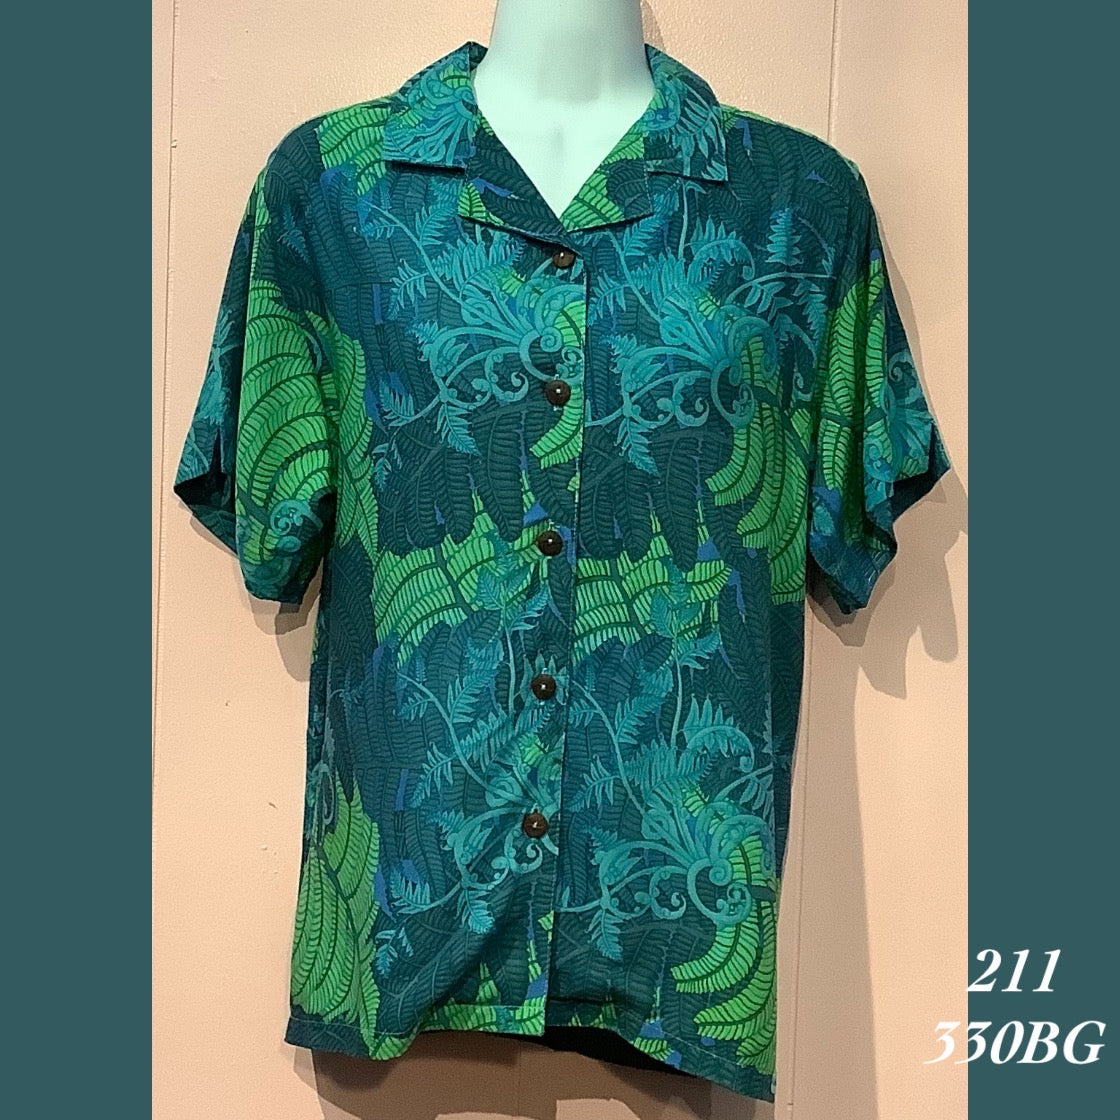 211 - 330BG , Women's Aloha shirt